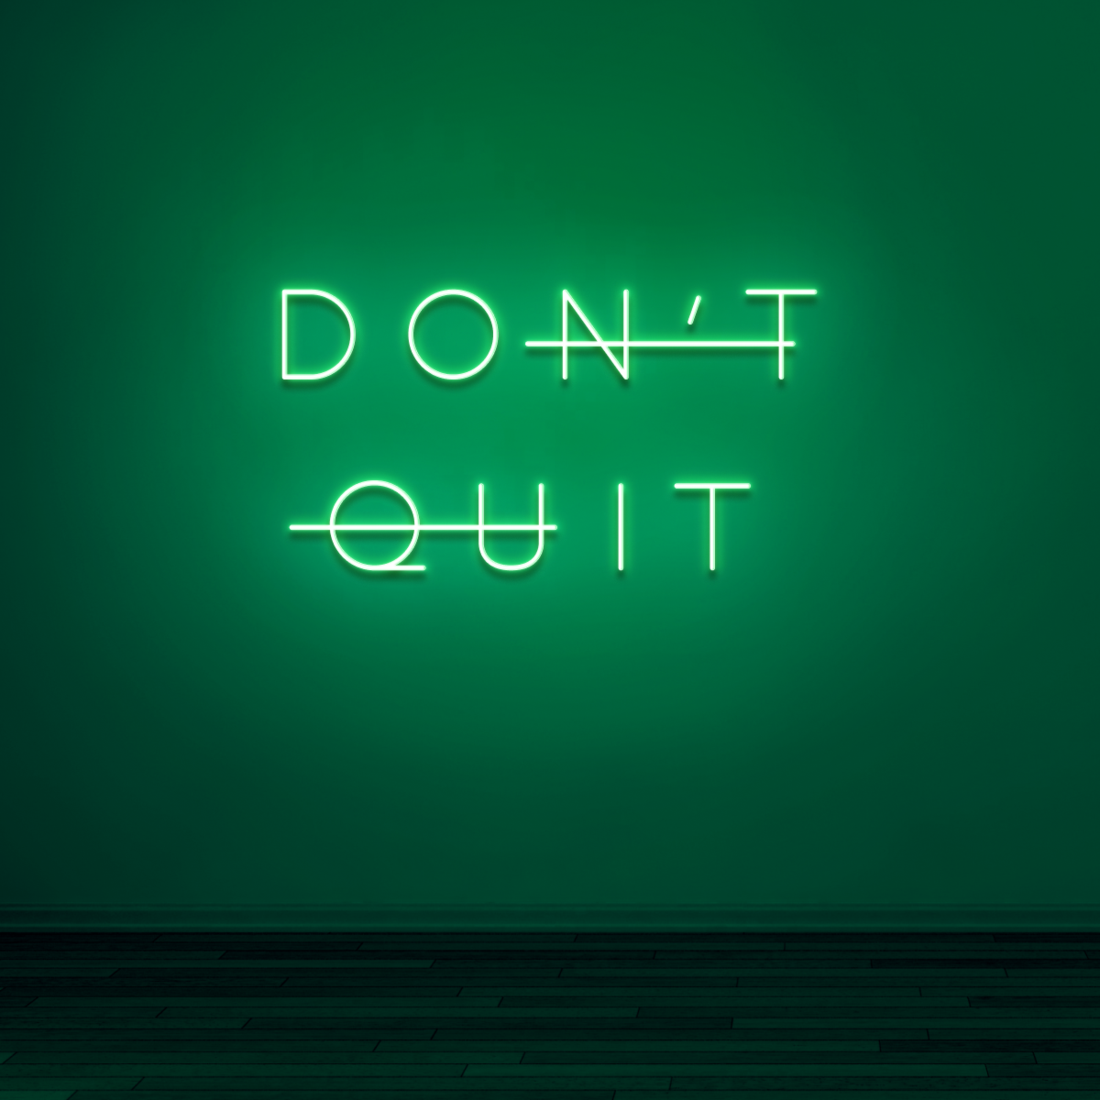 "DON'T QUIT" - NEONIDAS NEONSCHILD LED-SCHILD